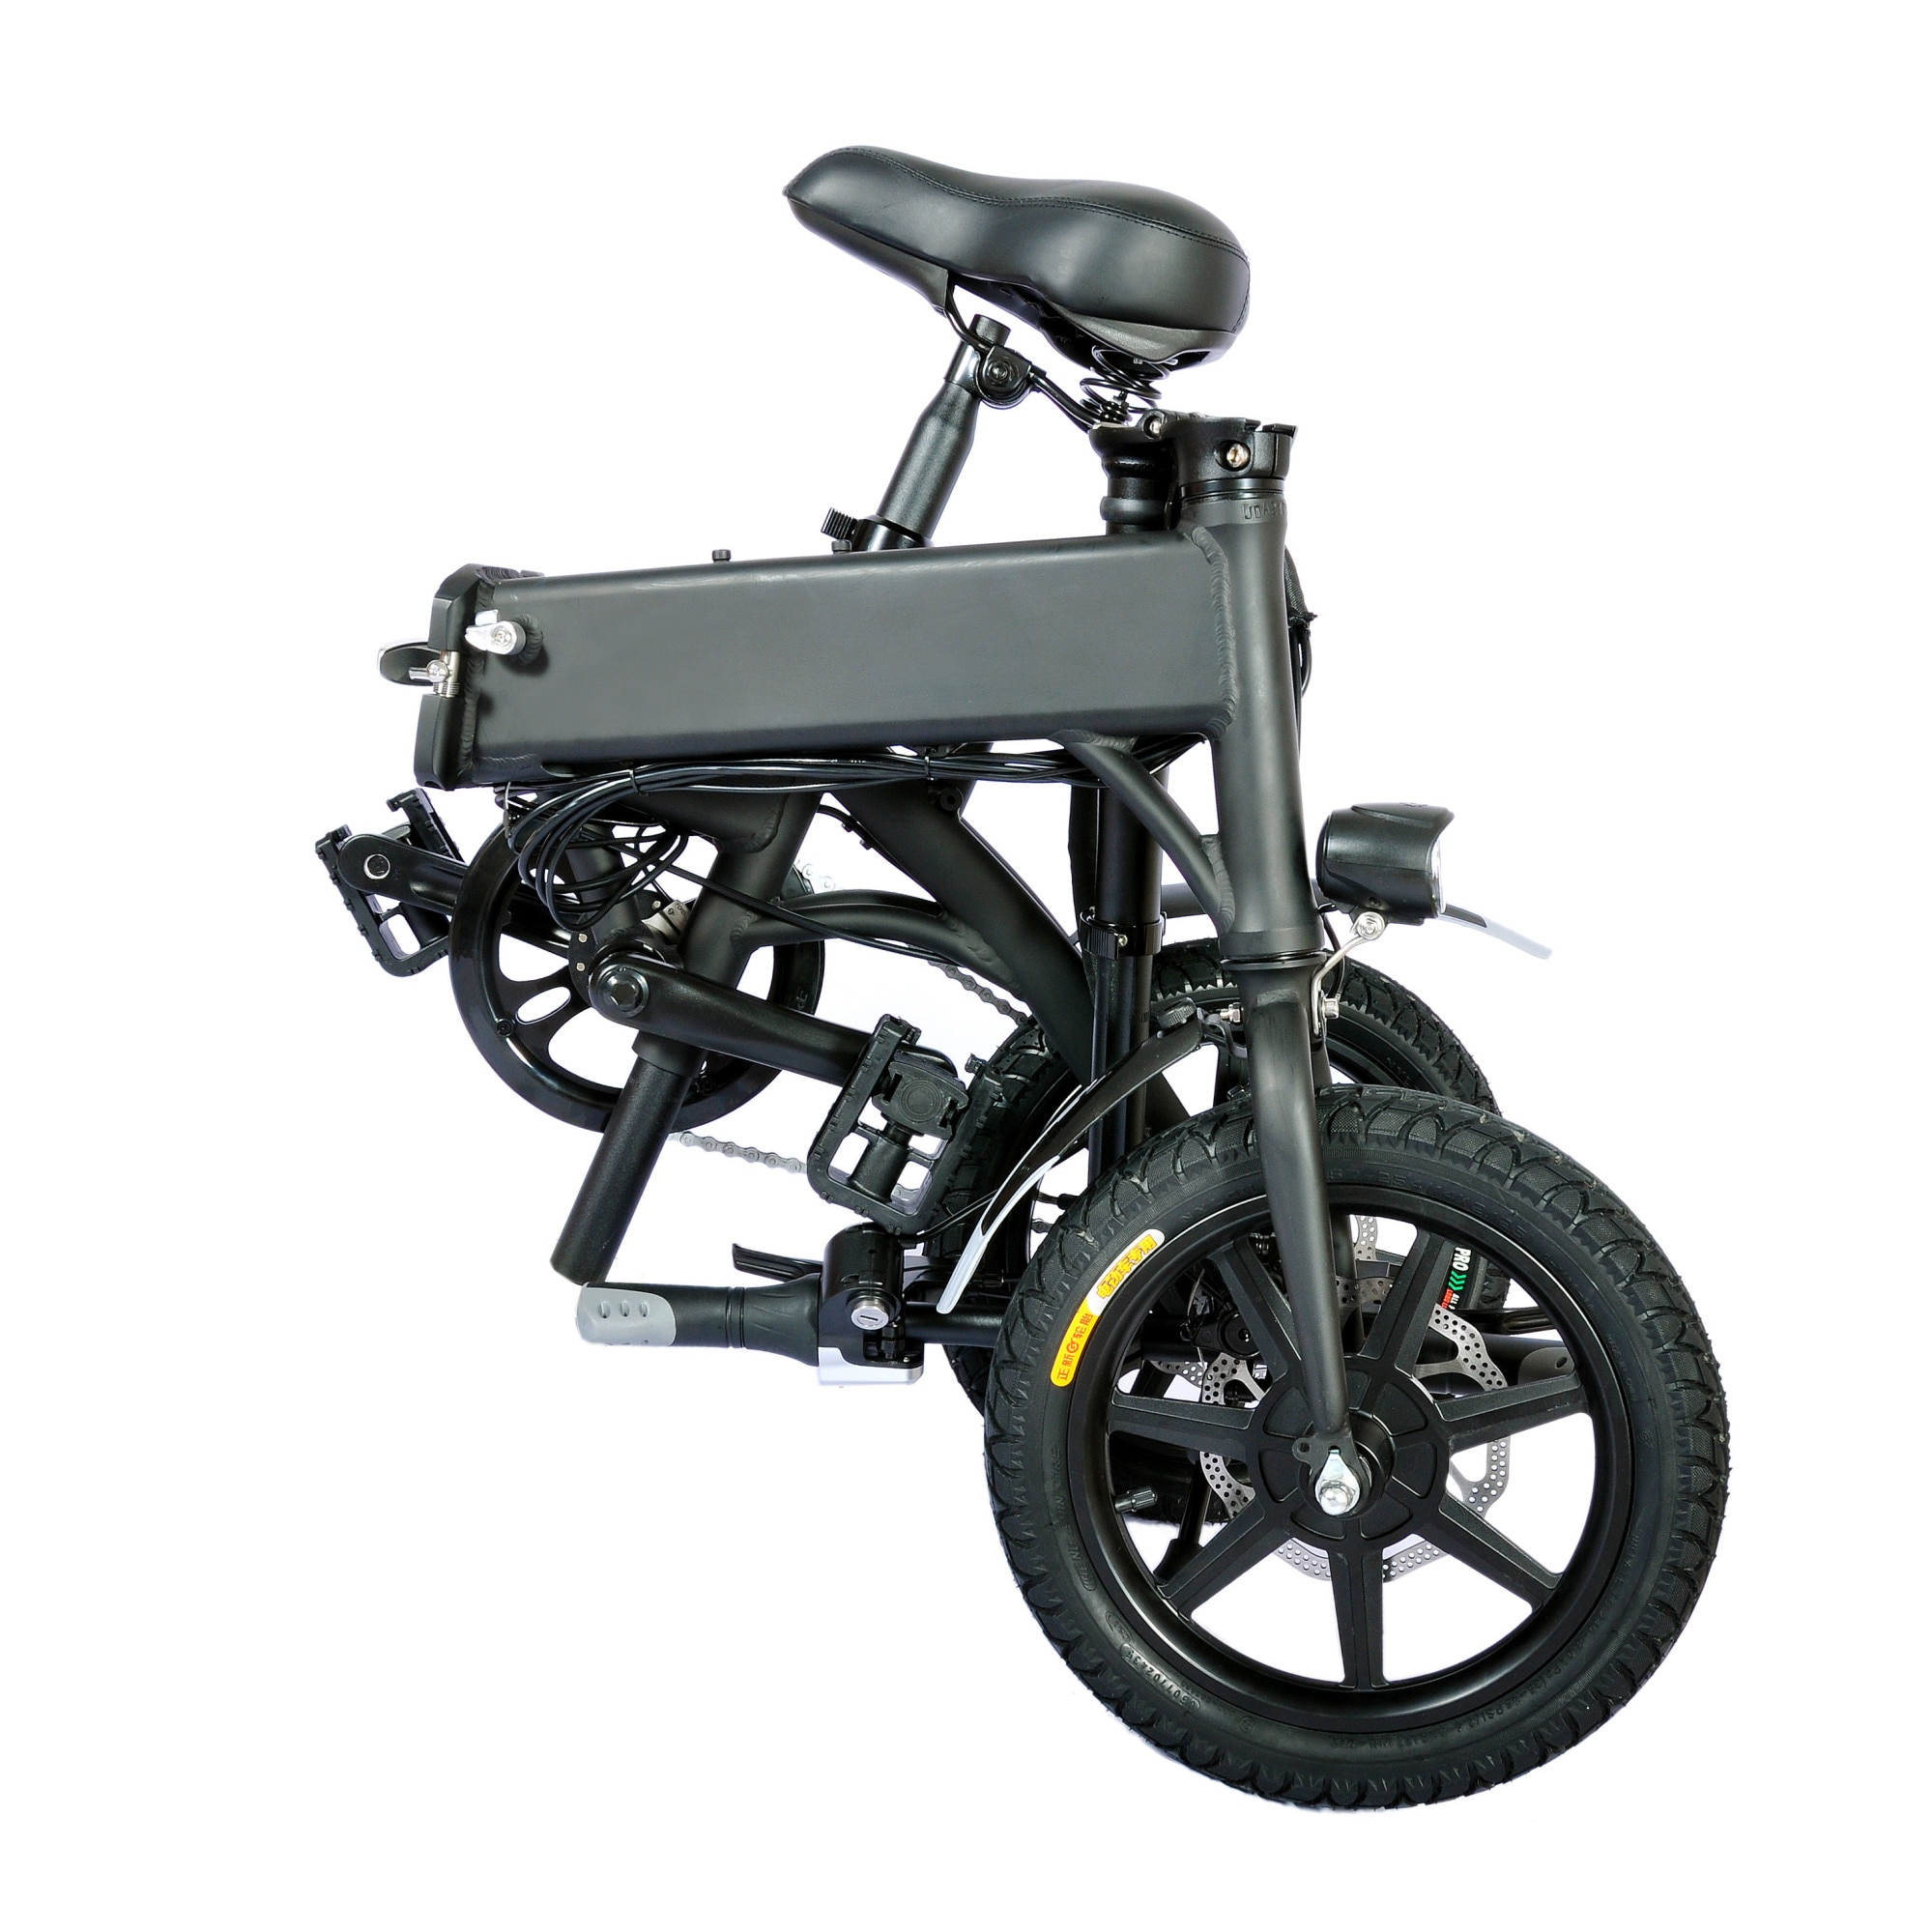 Biciclete, trotinete si scutere electrice - de unde le poti cumpara, reduceri si modele